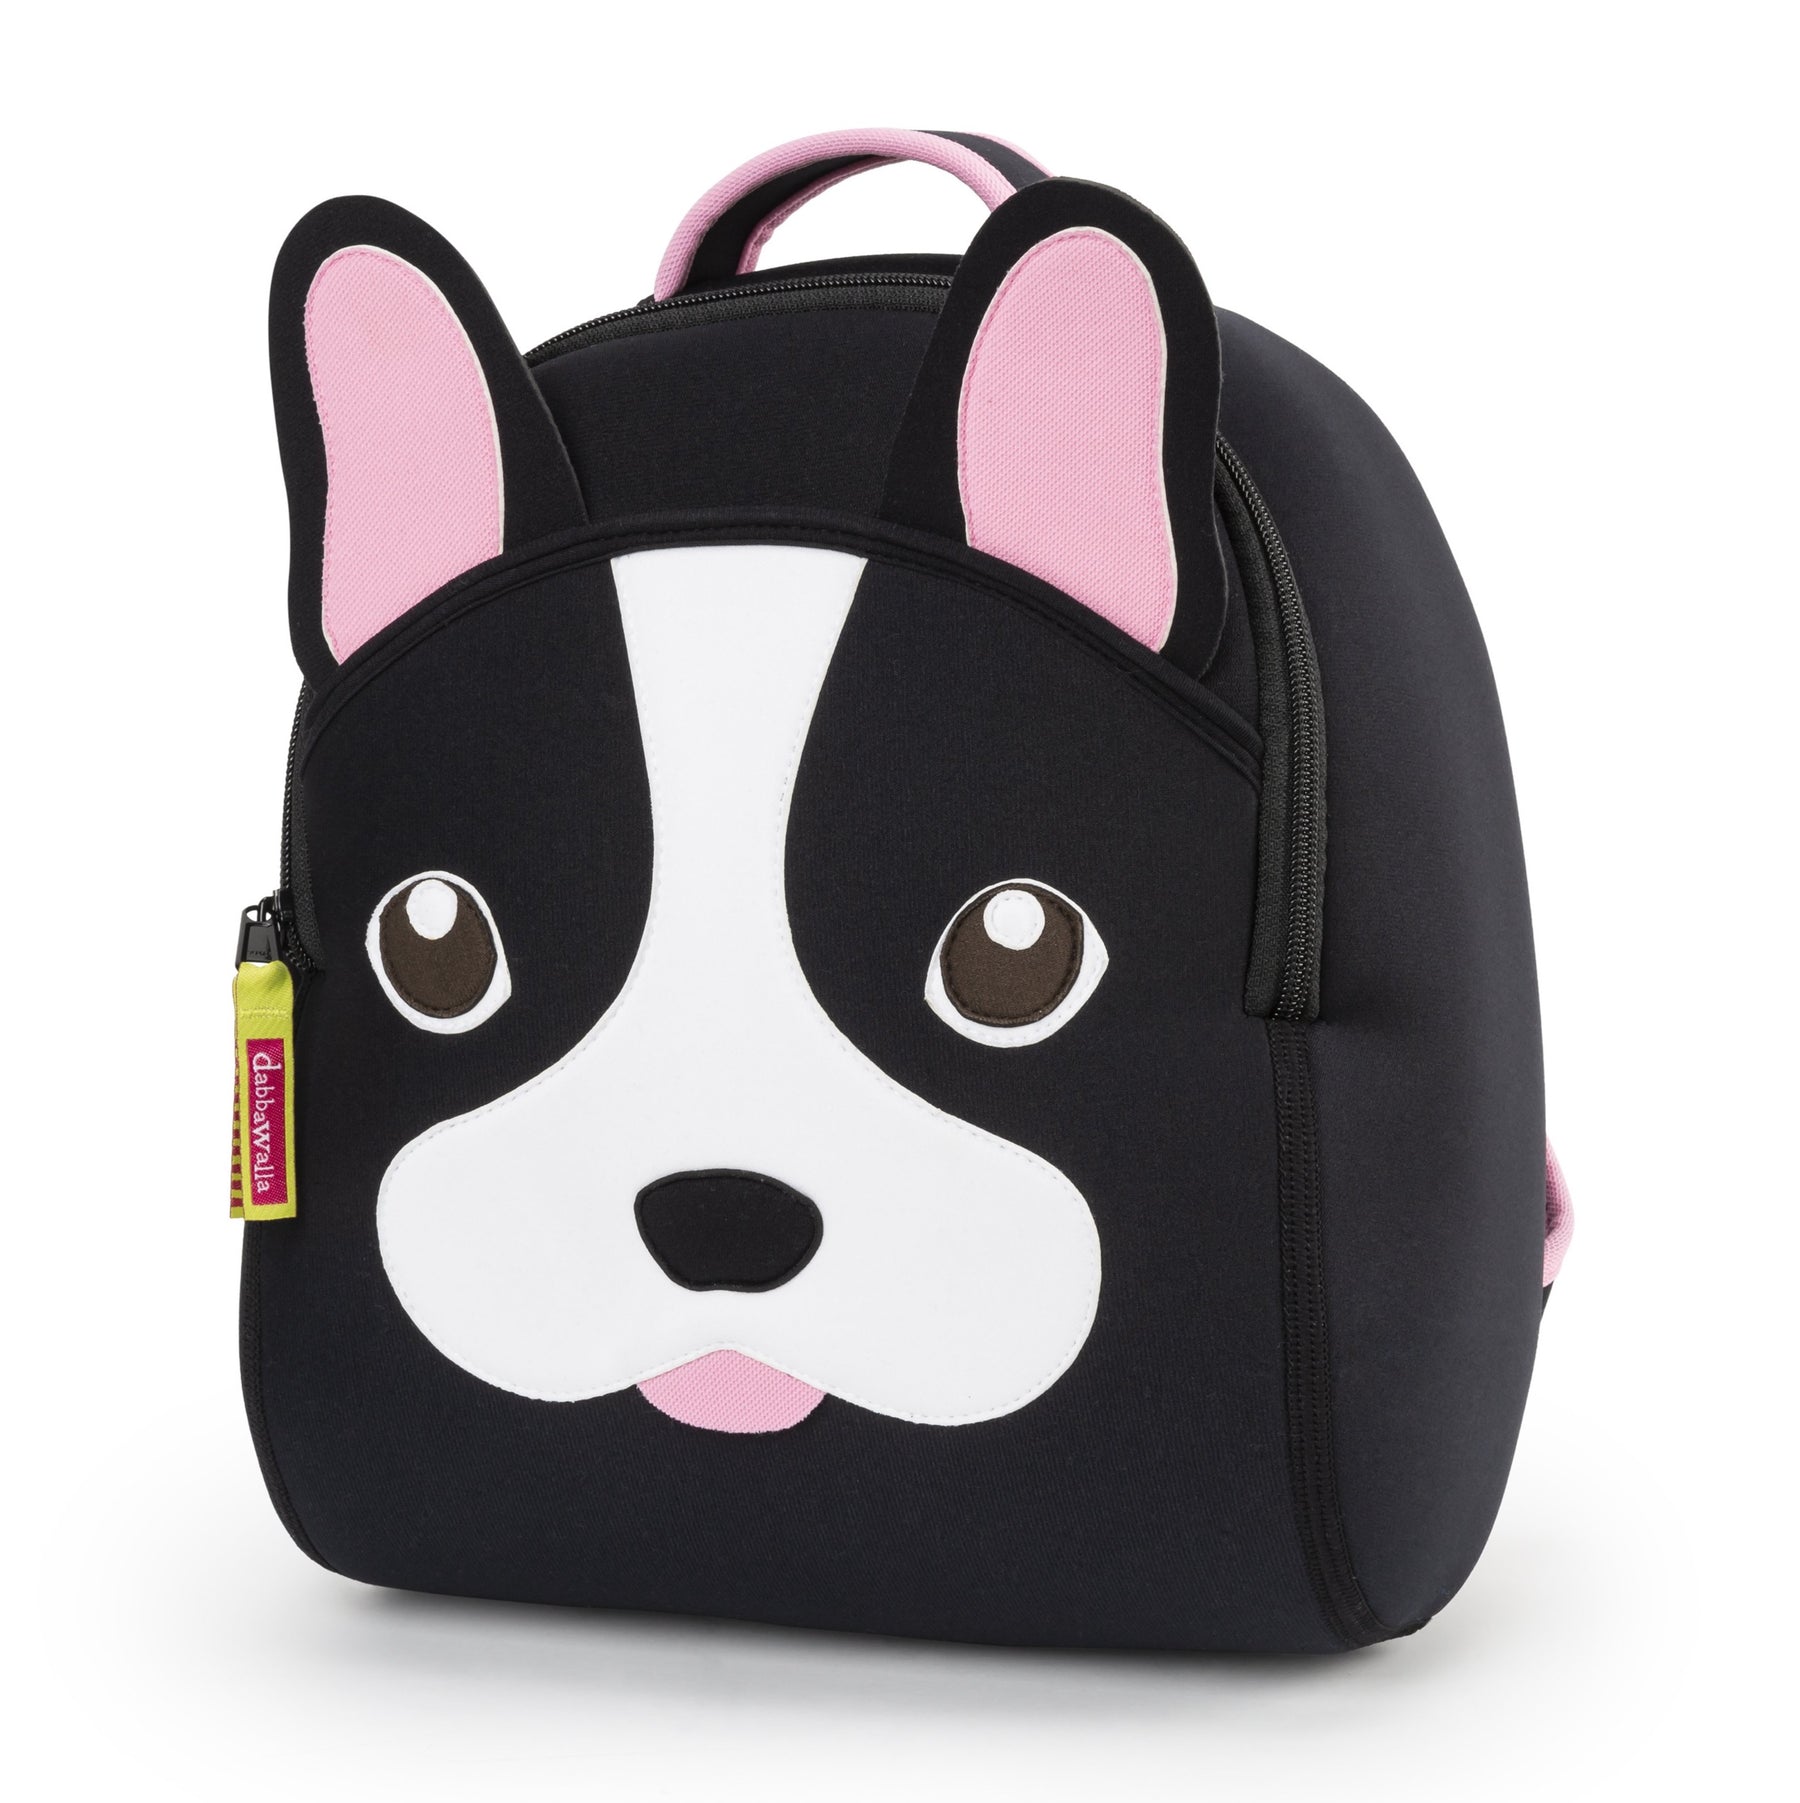 Poochie & Co Kids Girls Plush Black N White Dog Animal Purse Handbag | eBay